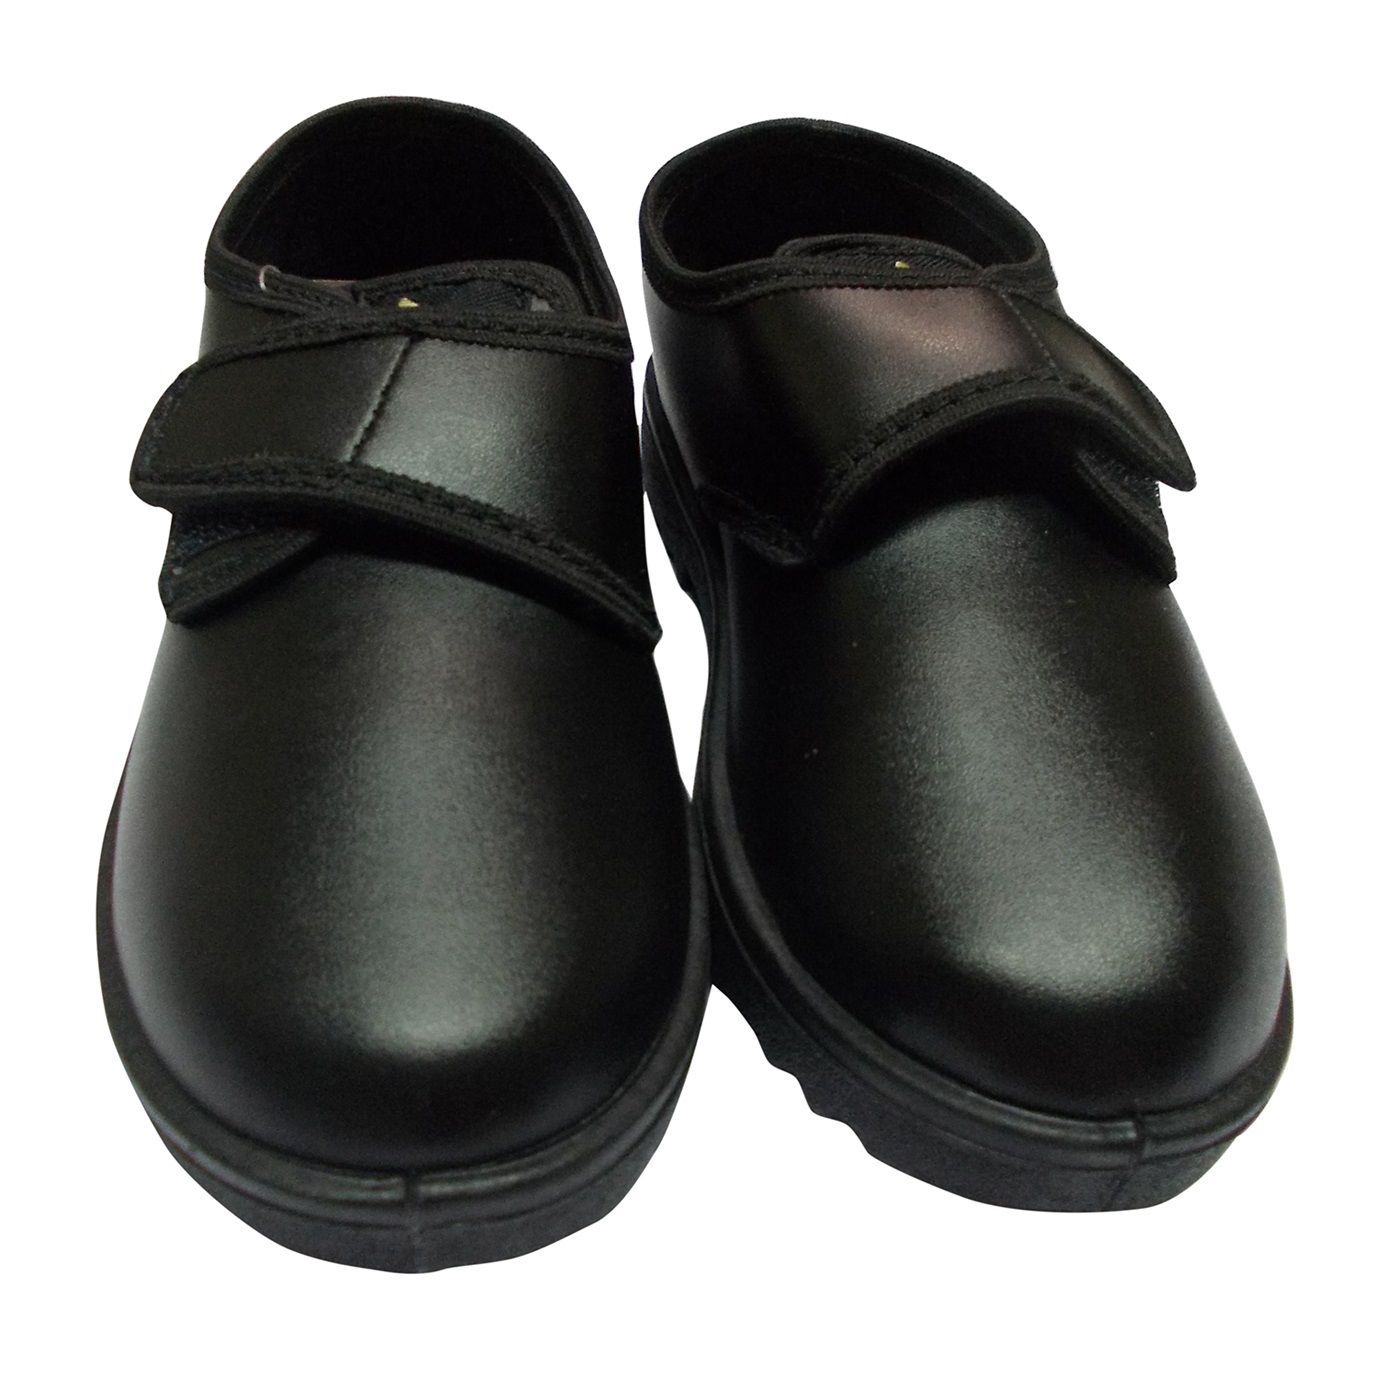 Buy Adonis Welcro Black School Shoes 